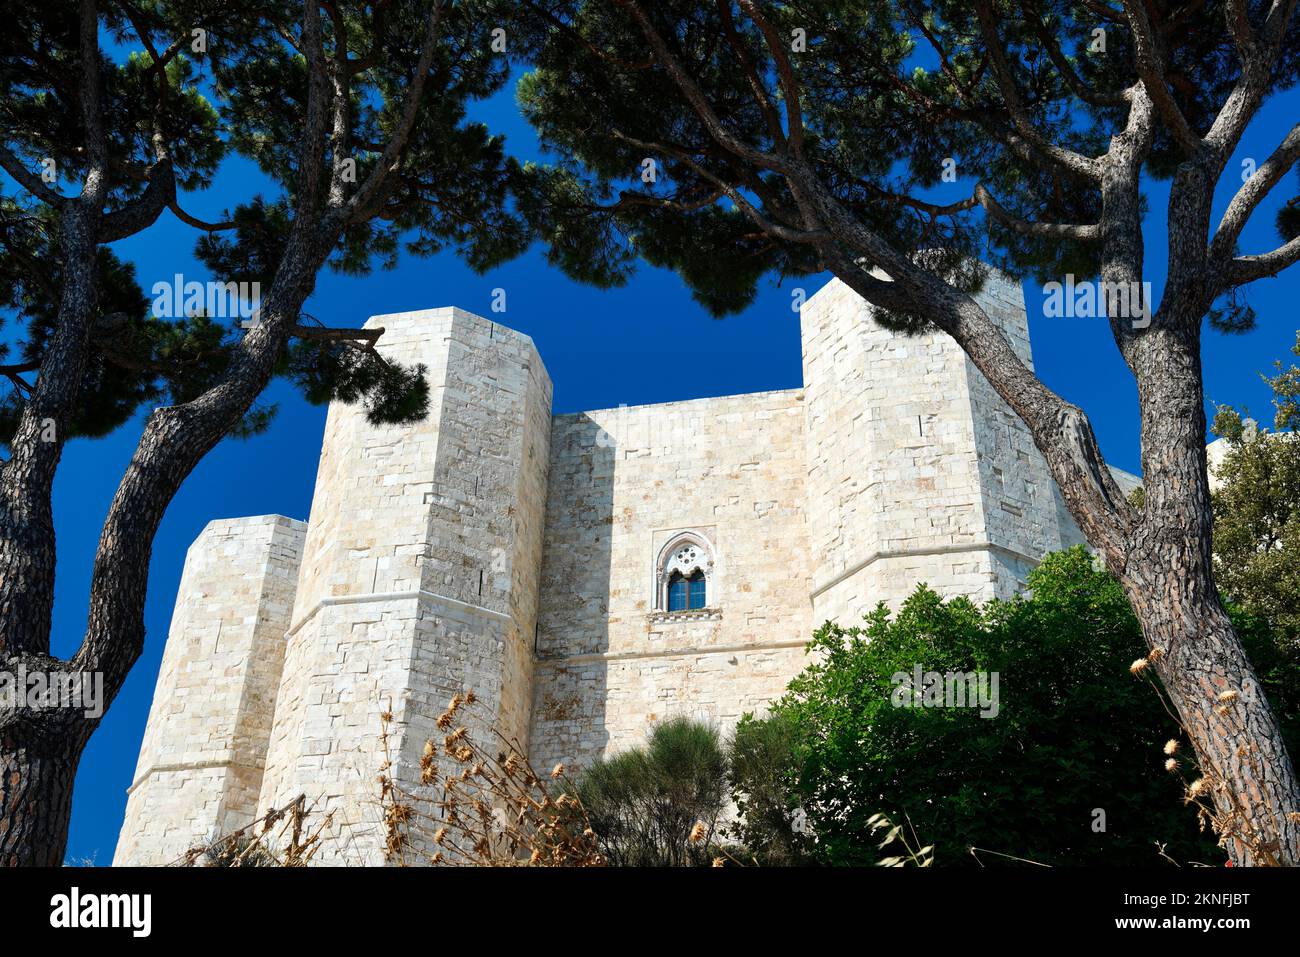 Castle,Castel del Monte,Stauferkaiser,Frederick II,Apulia region,Italy Stock Photo